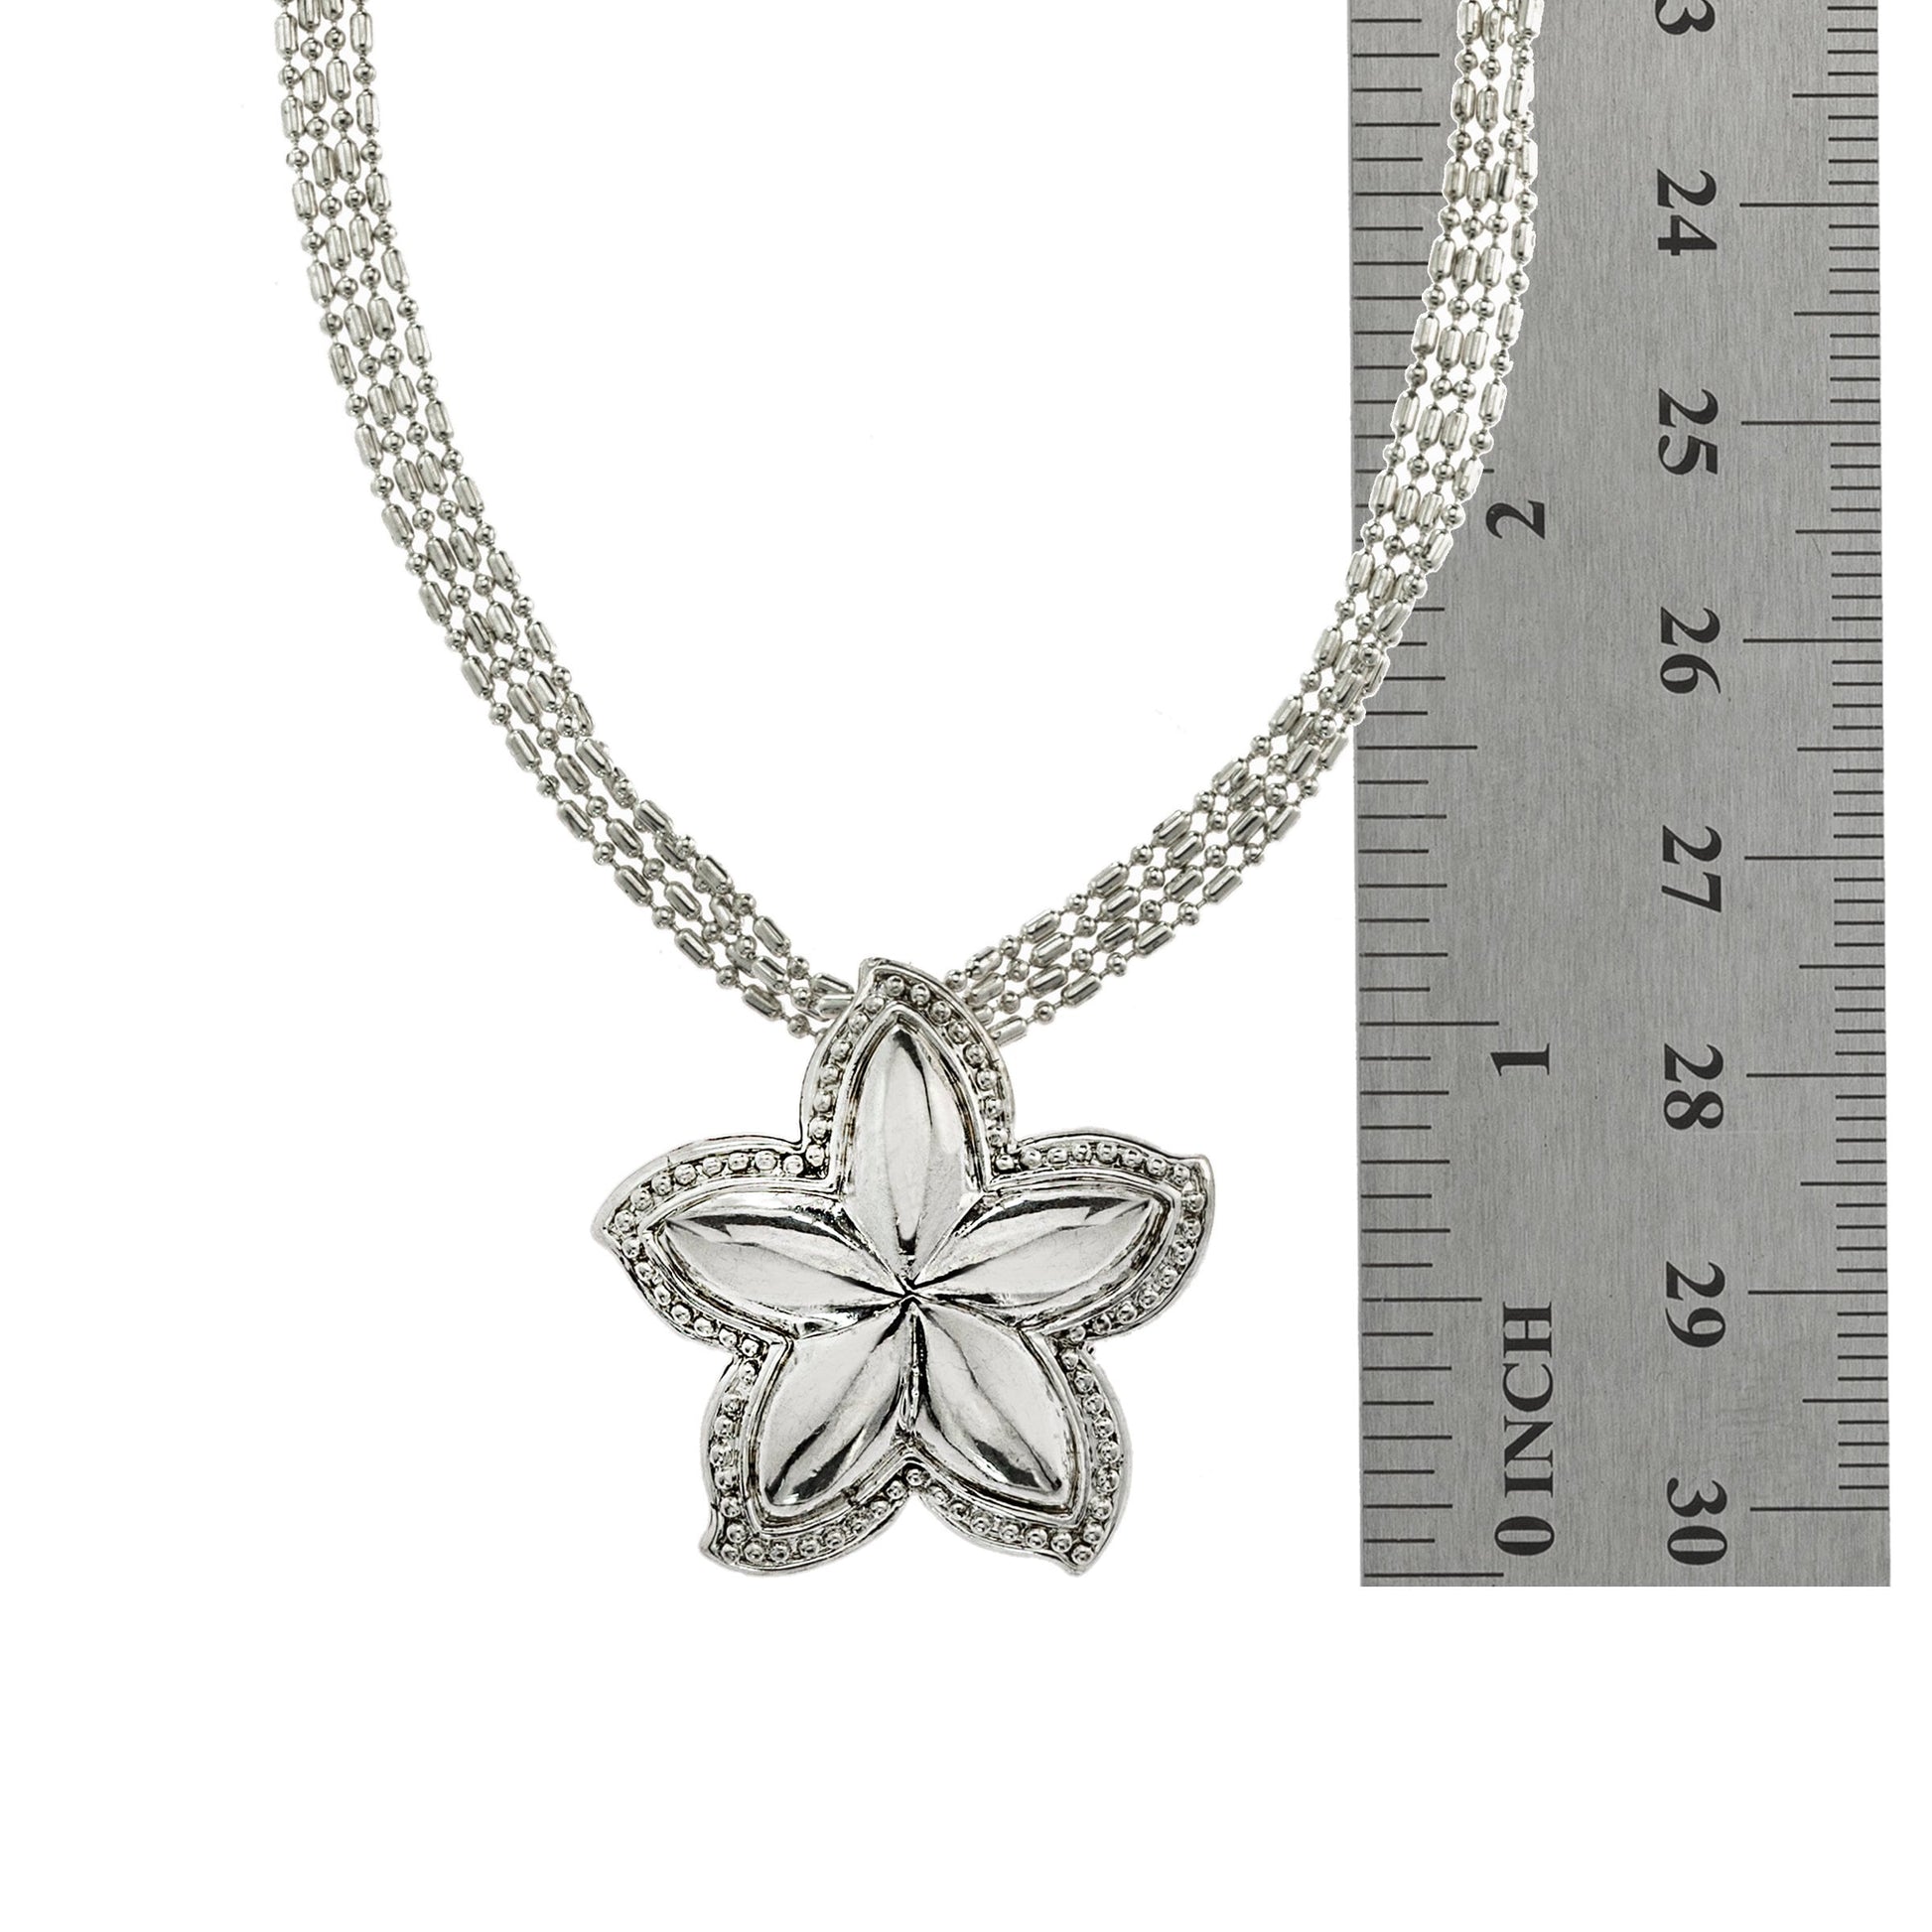 Vintage Oscar De La Renta 24 Inch White Gold Silver Tone Star Pendant Necklace #OSN-630-W - Limited Stock - Never Worn